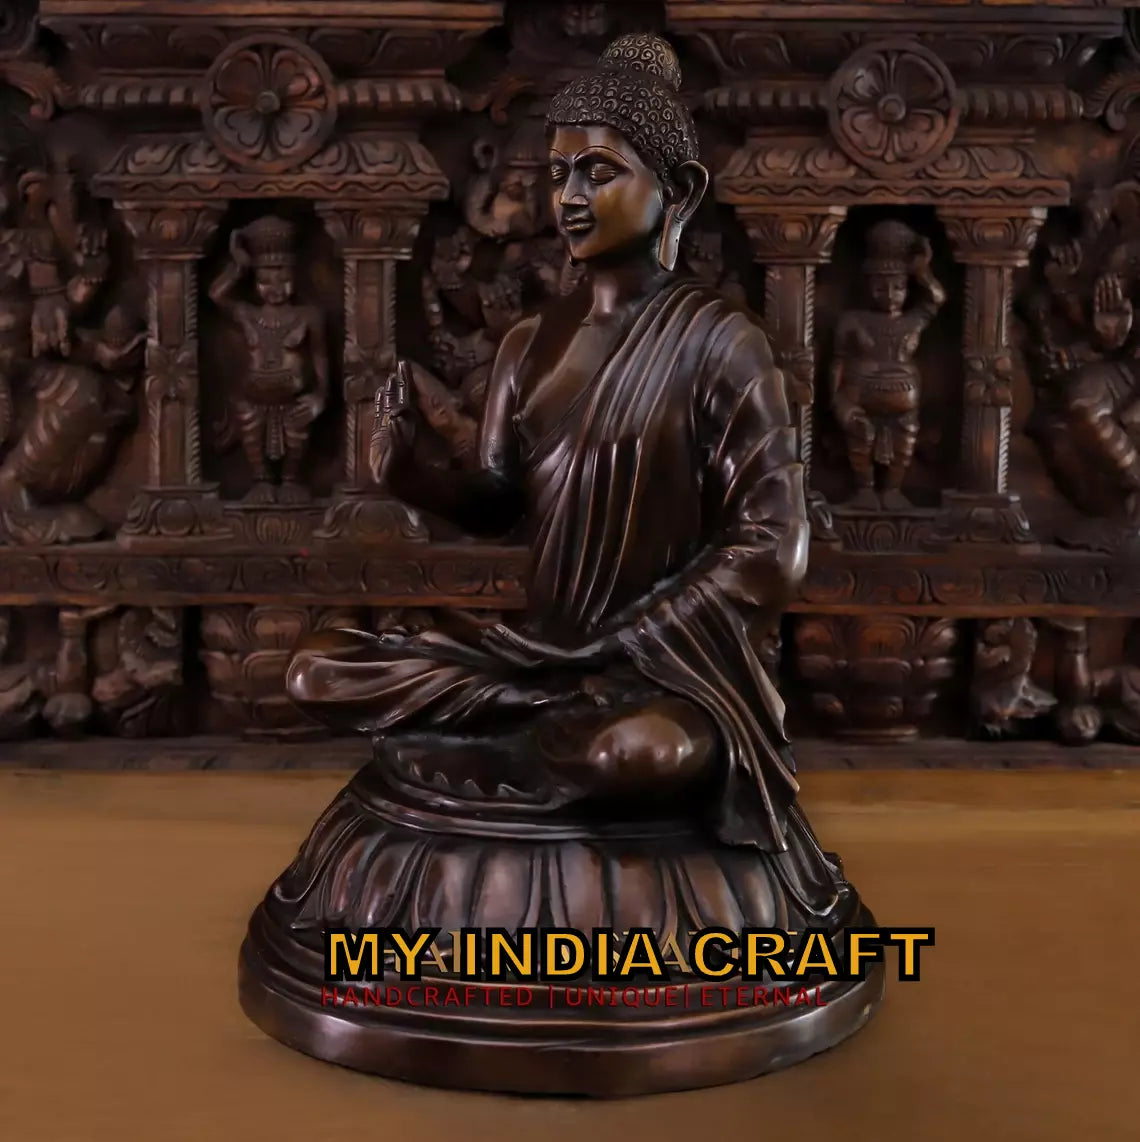 22.5" Buddha statue